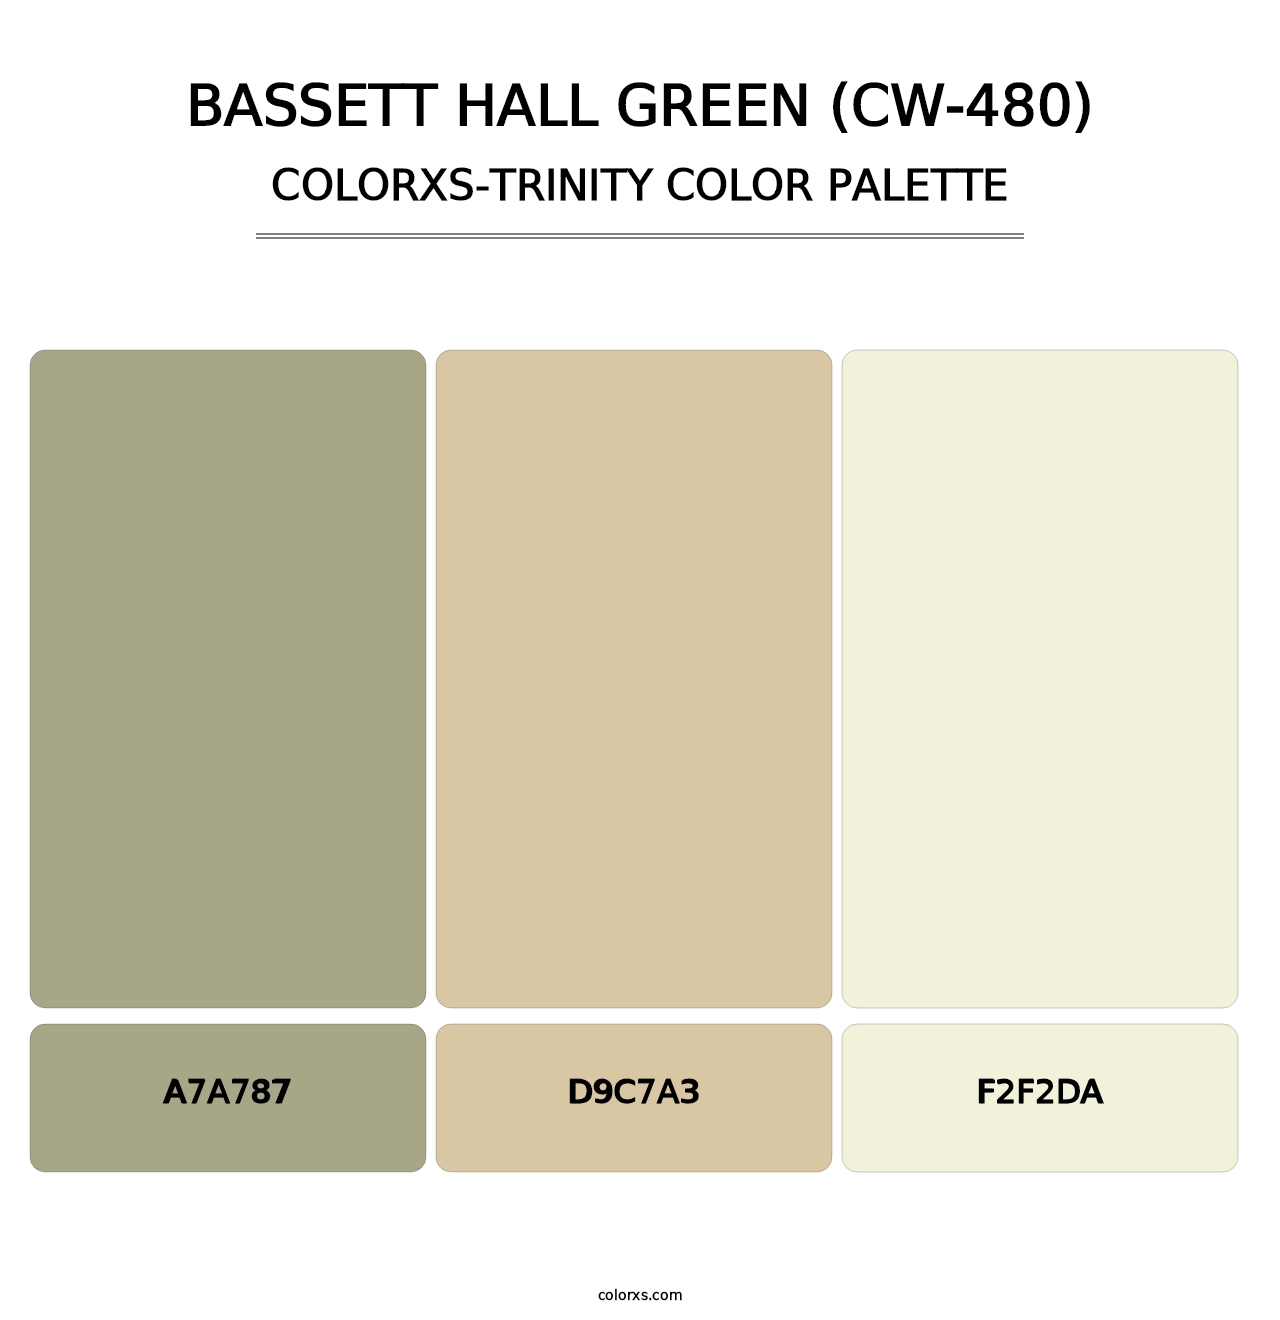 Bassett Hall Green (CW-480) - Colorxs Trinity Palette